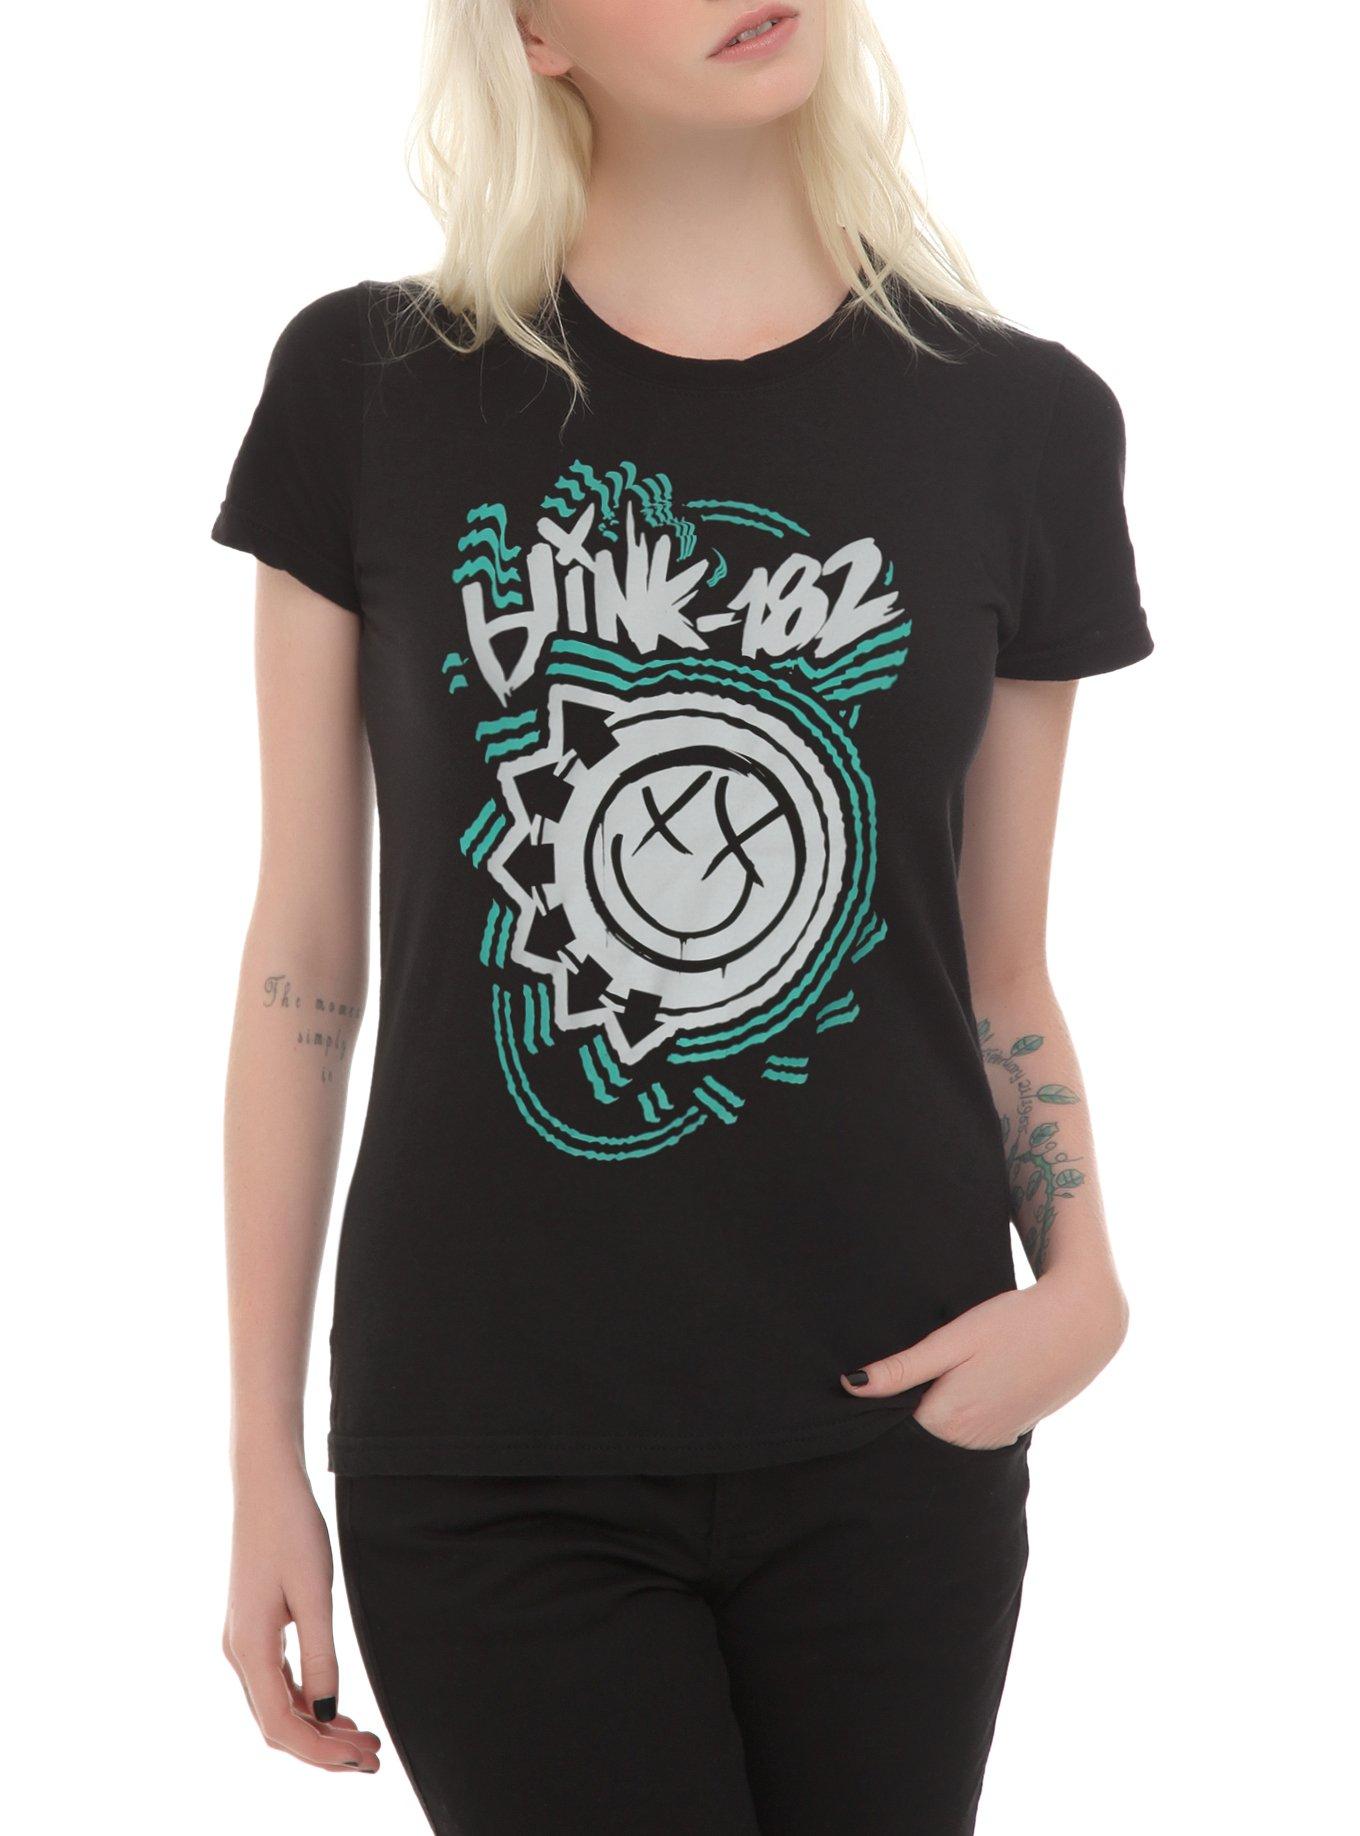 Blink-182 Smiley Logo Girls T-Shirt, BLACK, hi-res